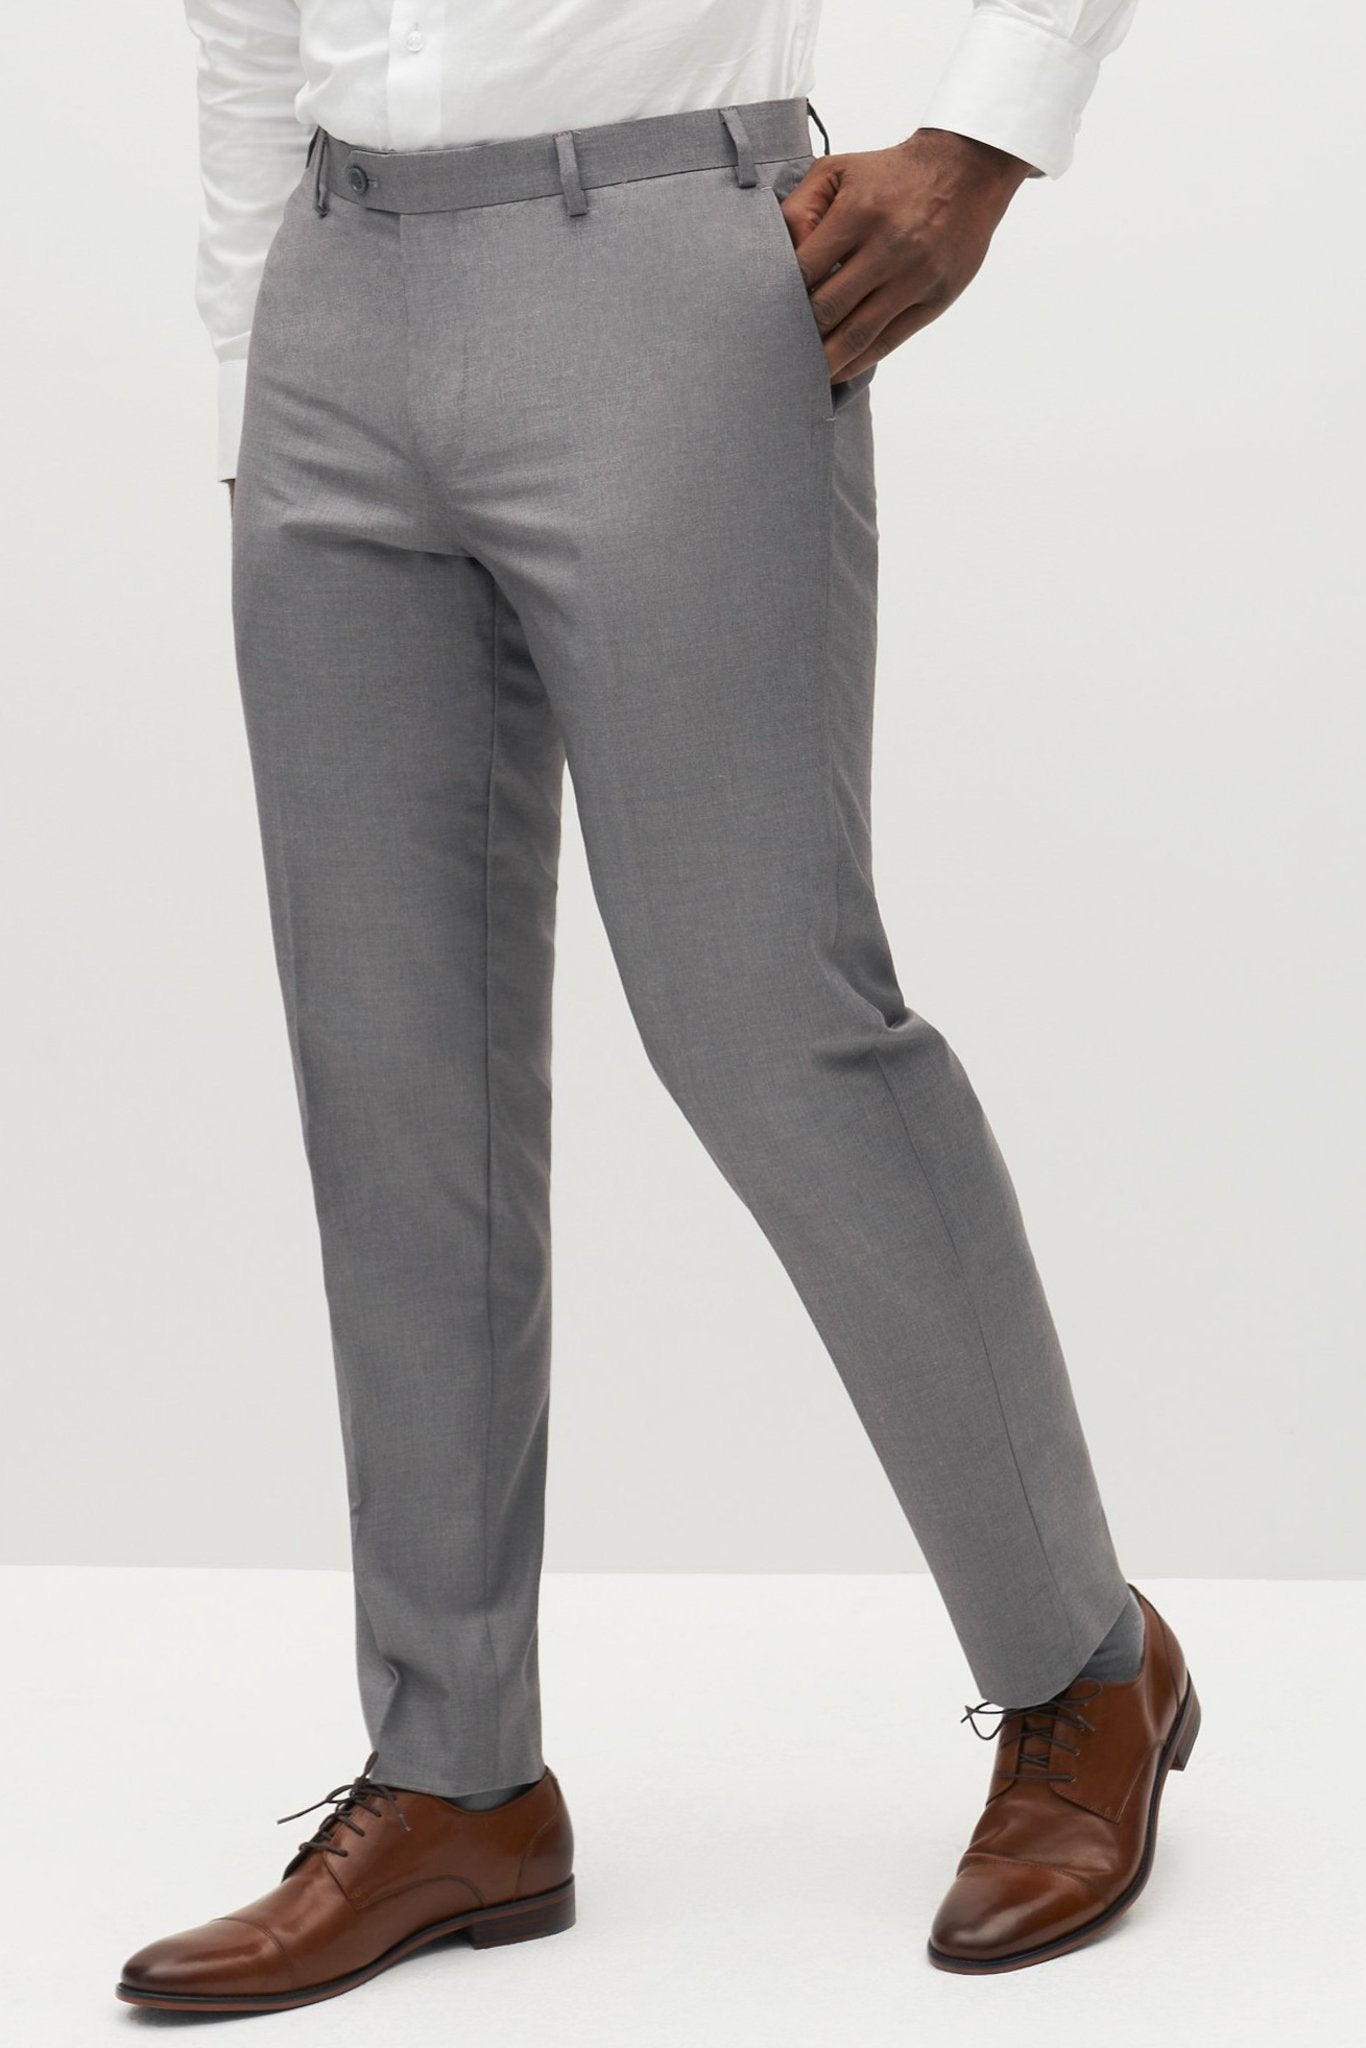 Textured Gray Groomsmen Suit by SuitShop, side view